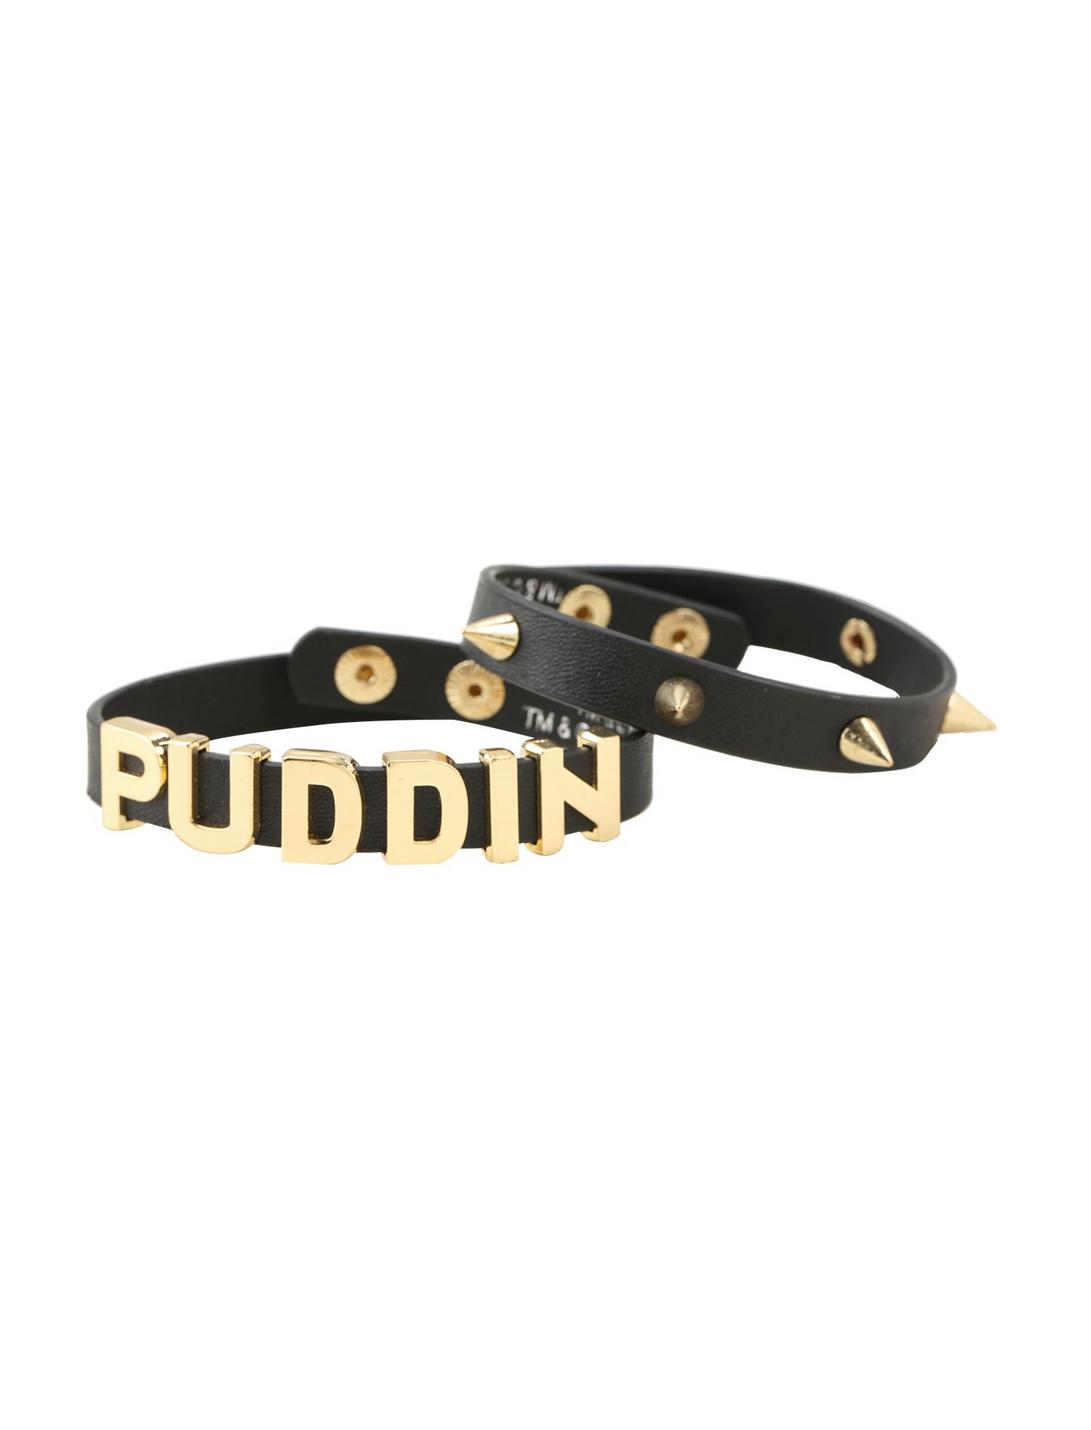 DC Comics Suicide Squad PUDDIN Cuff Bracelet Set | Hot Topic